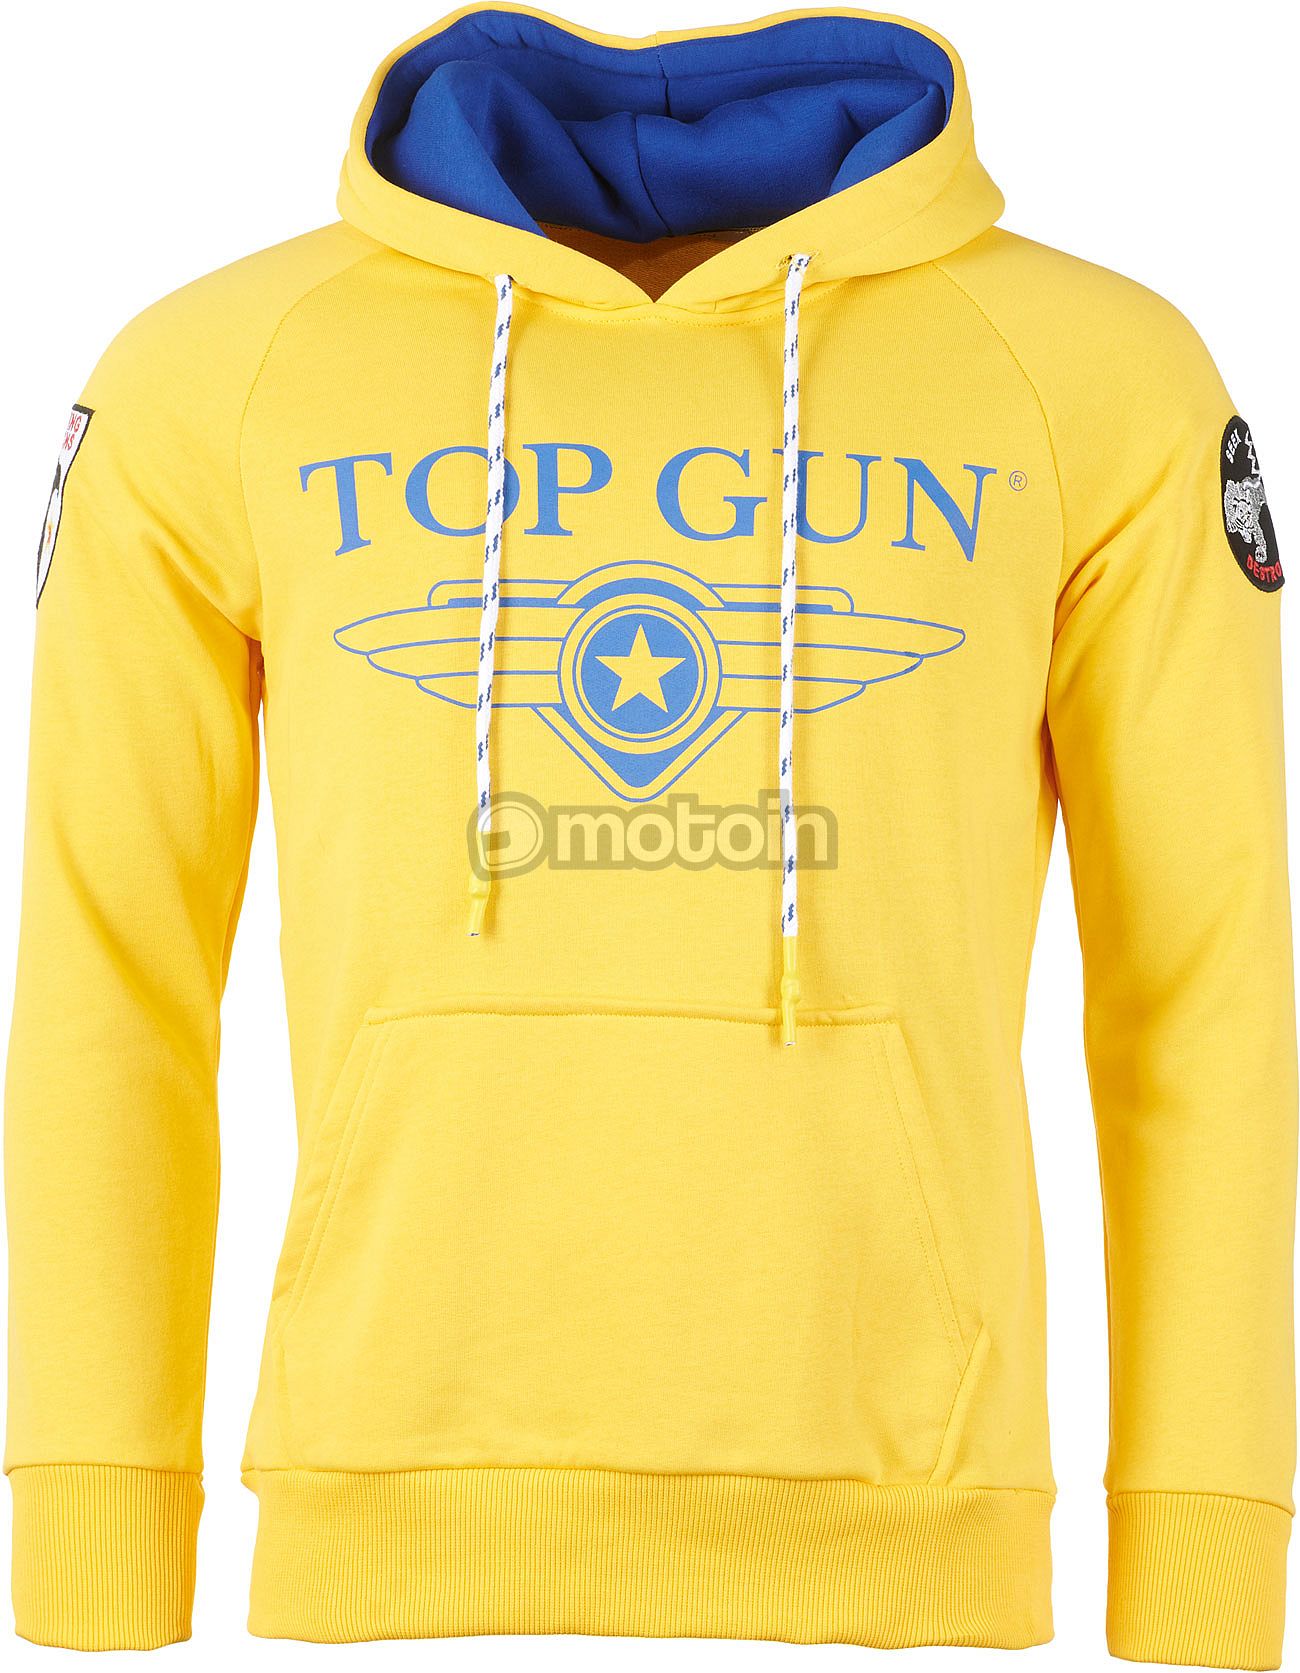 Top Gun Destroyer, hoodie